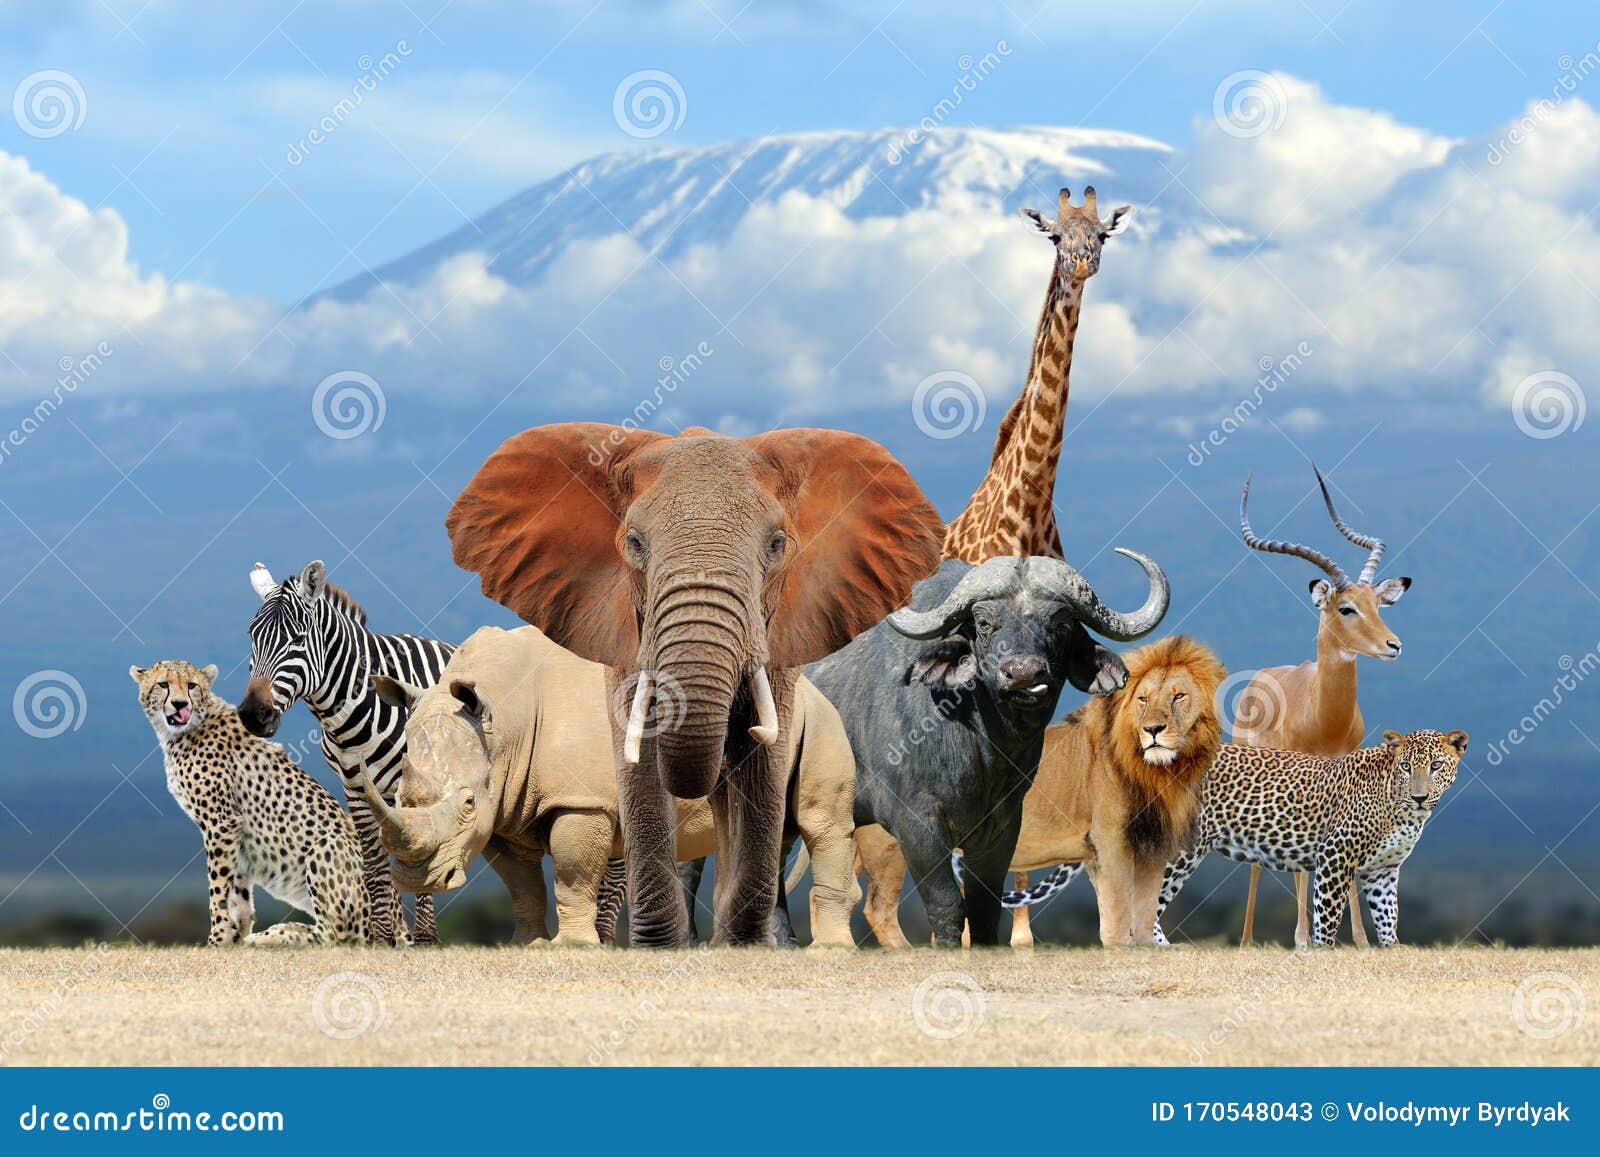 Group of African Safari Animals Together Stock Image - Image of bird, card:  170548043